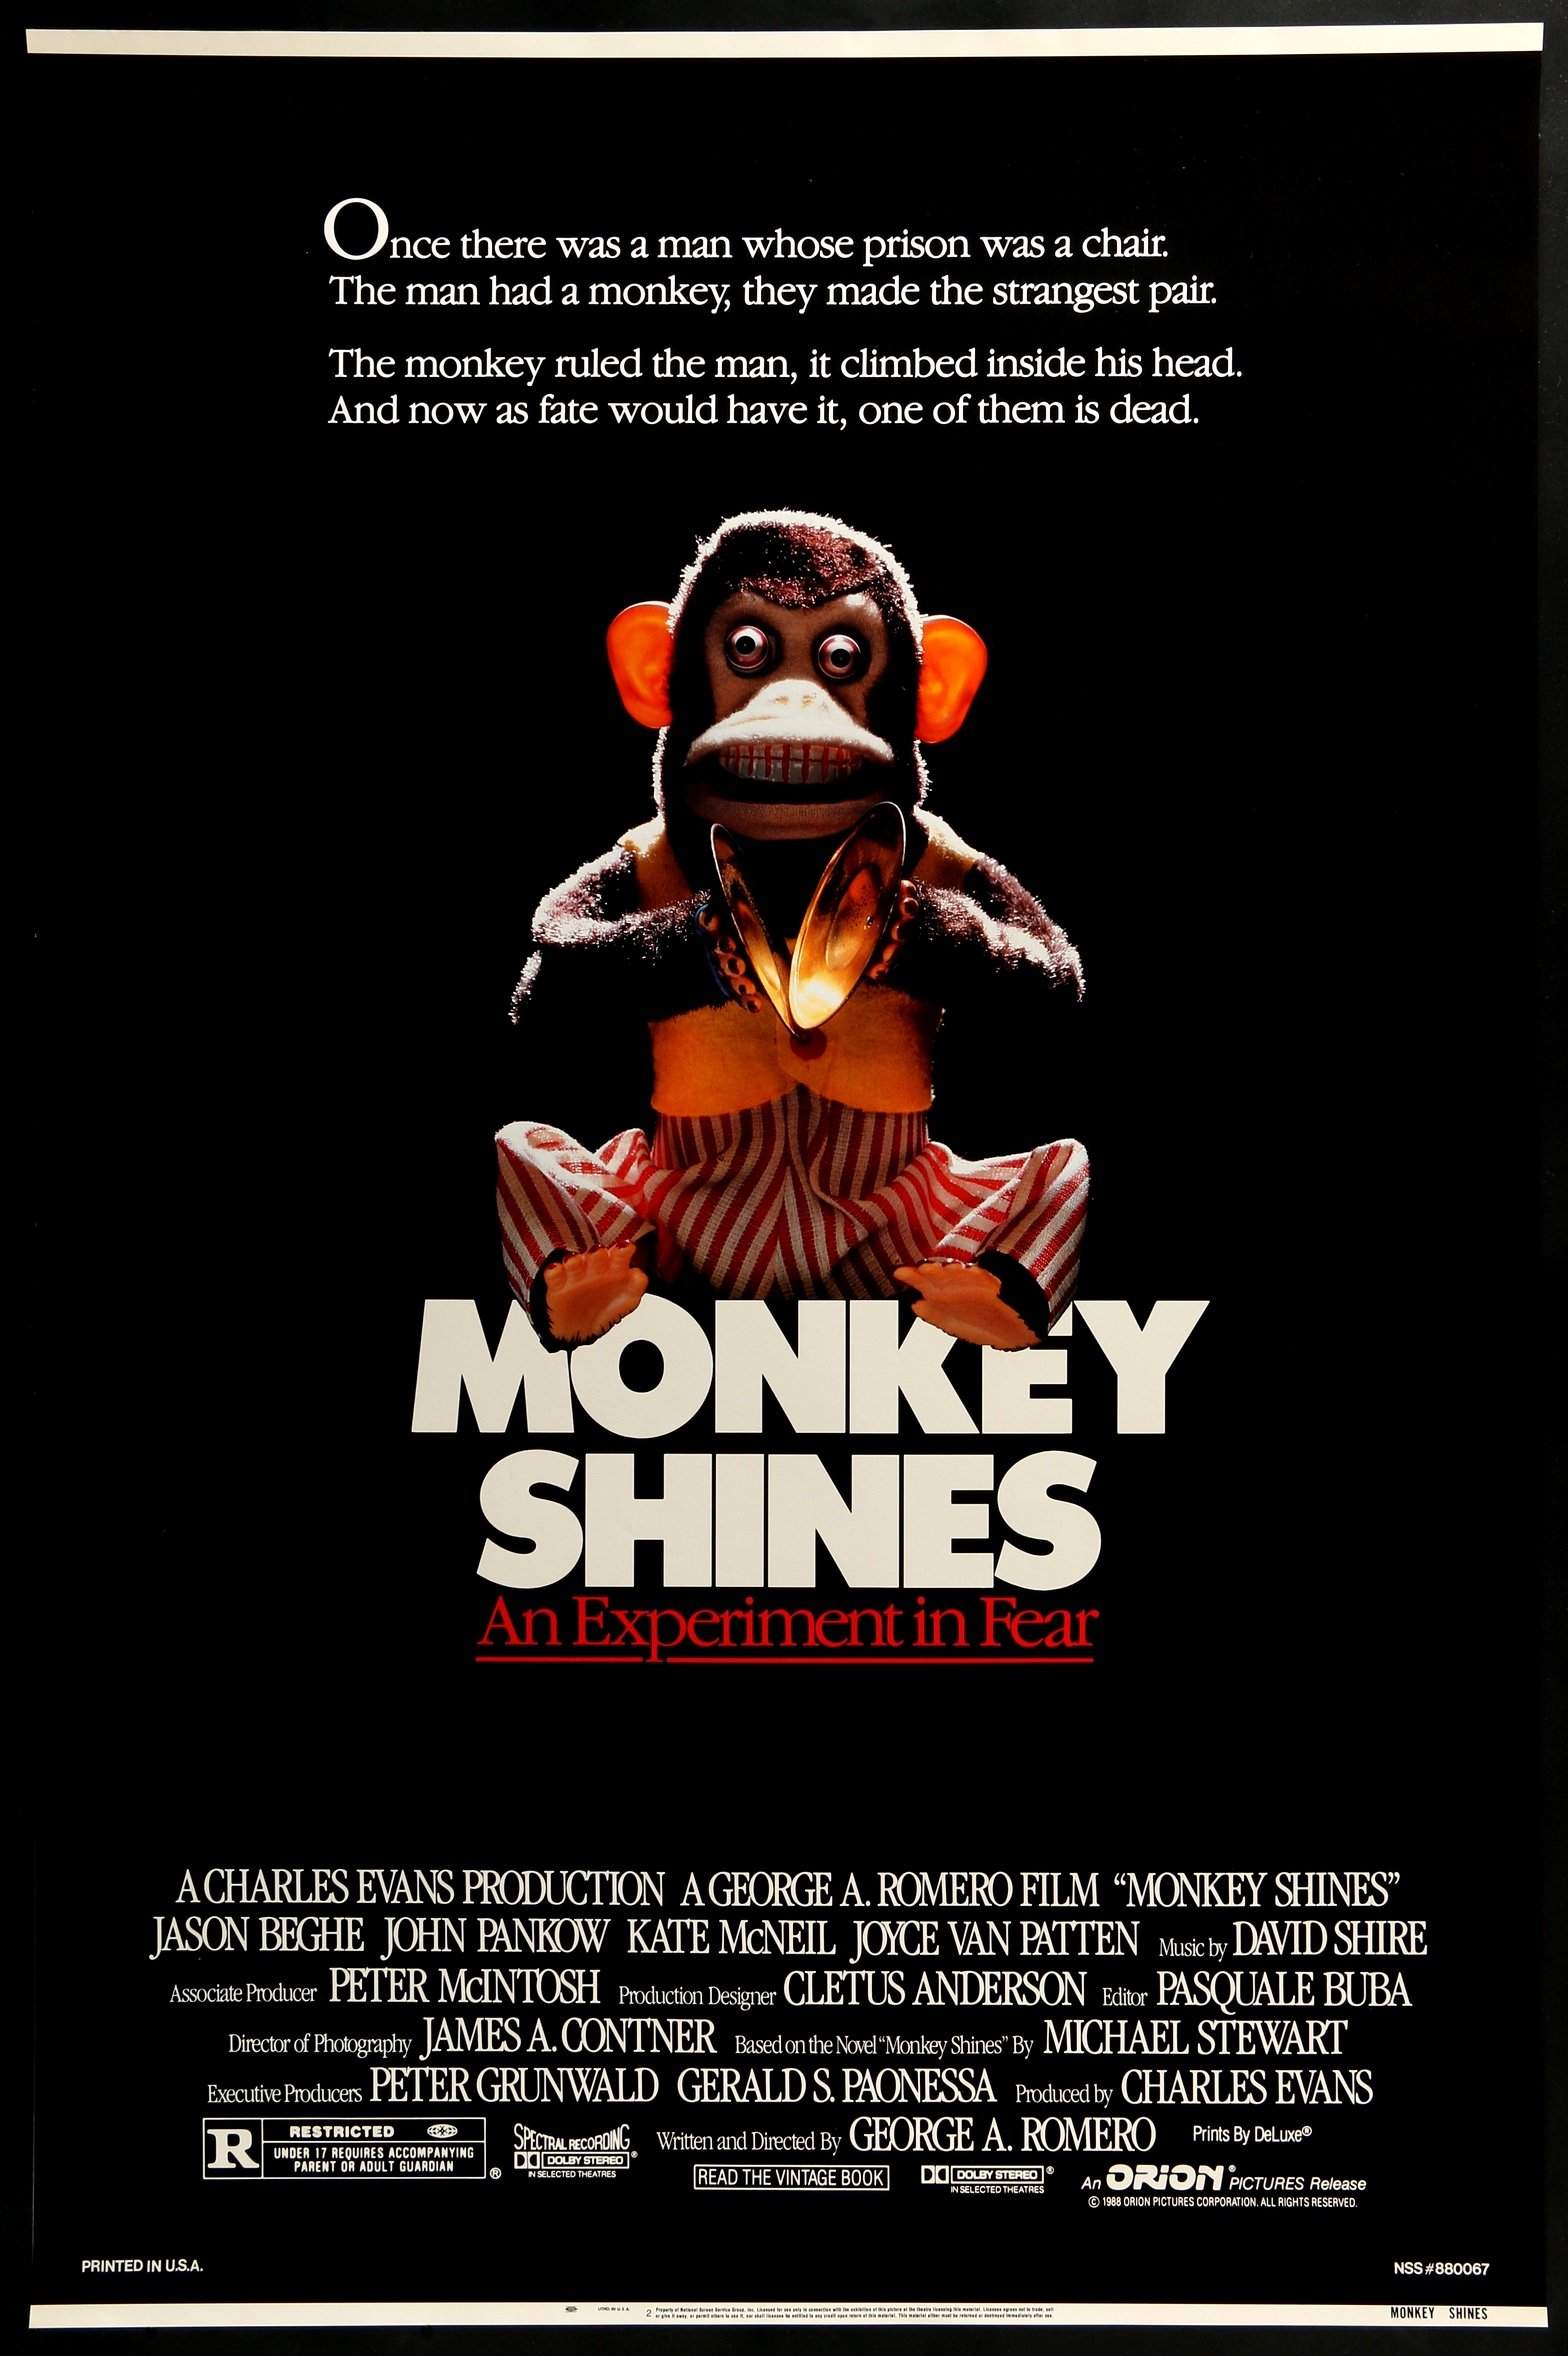 Monkey Shines (1988) original movie poster for sale at Original Film Art